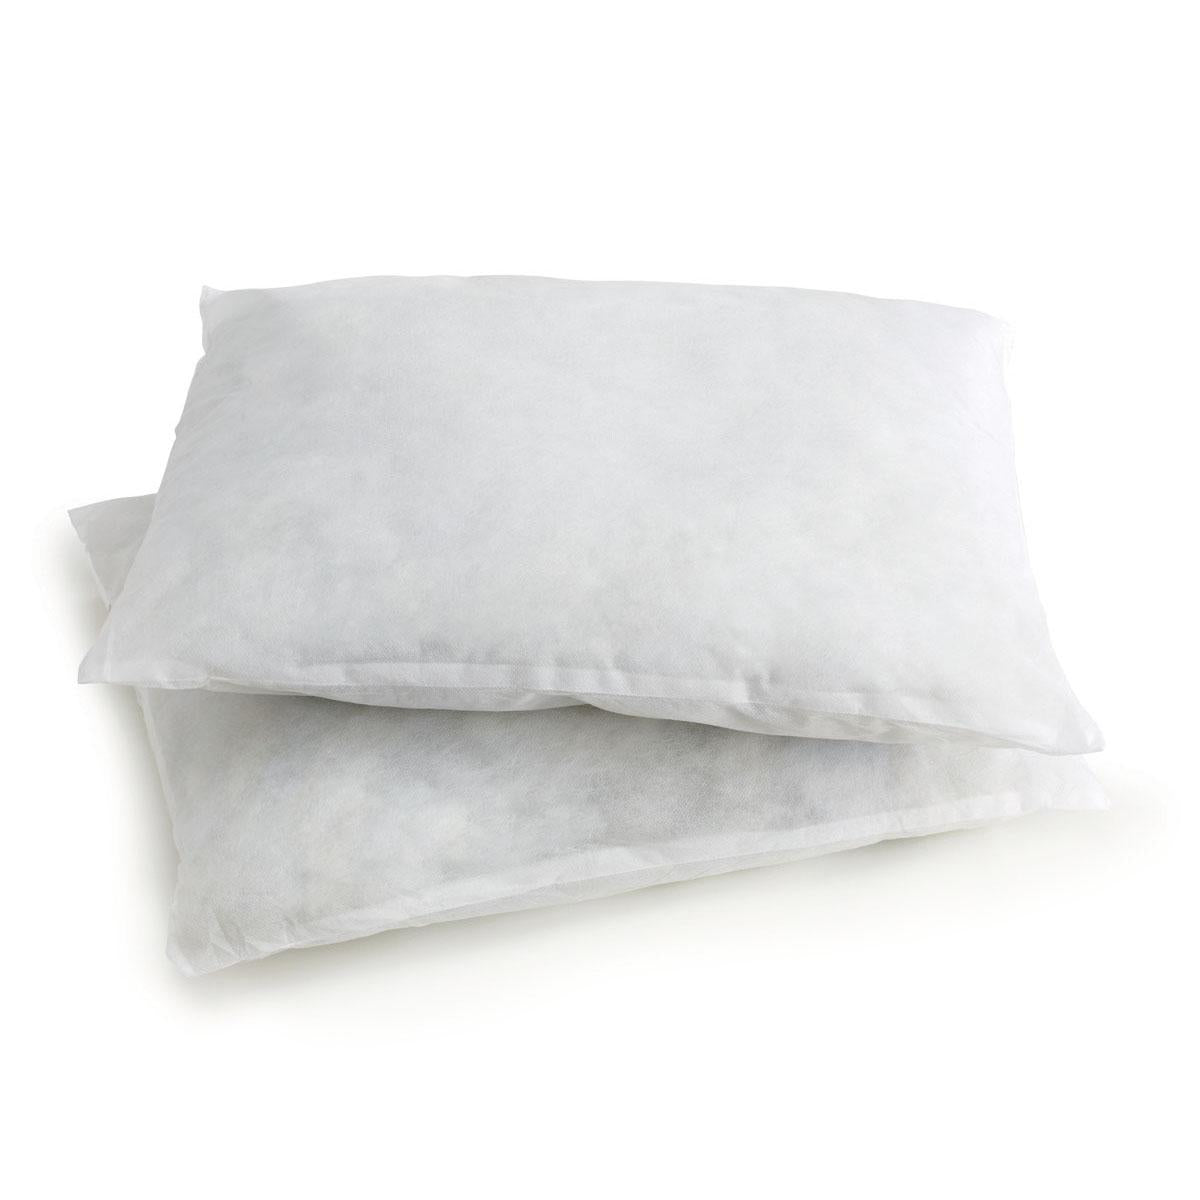 Medline Disposable Pillow, 18" X 24"